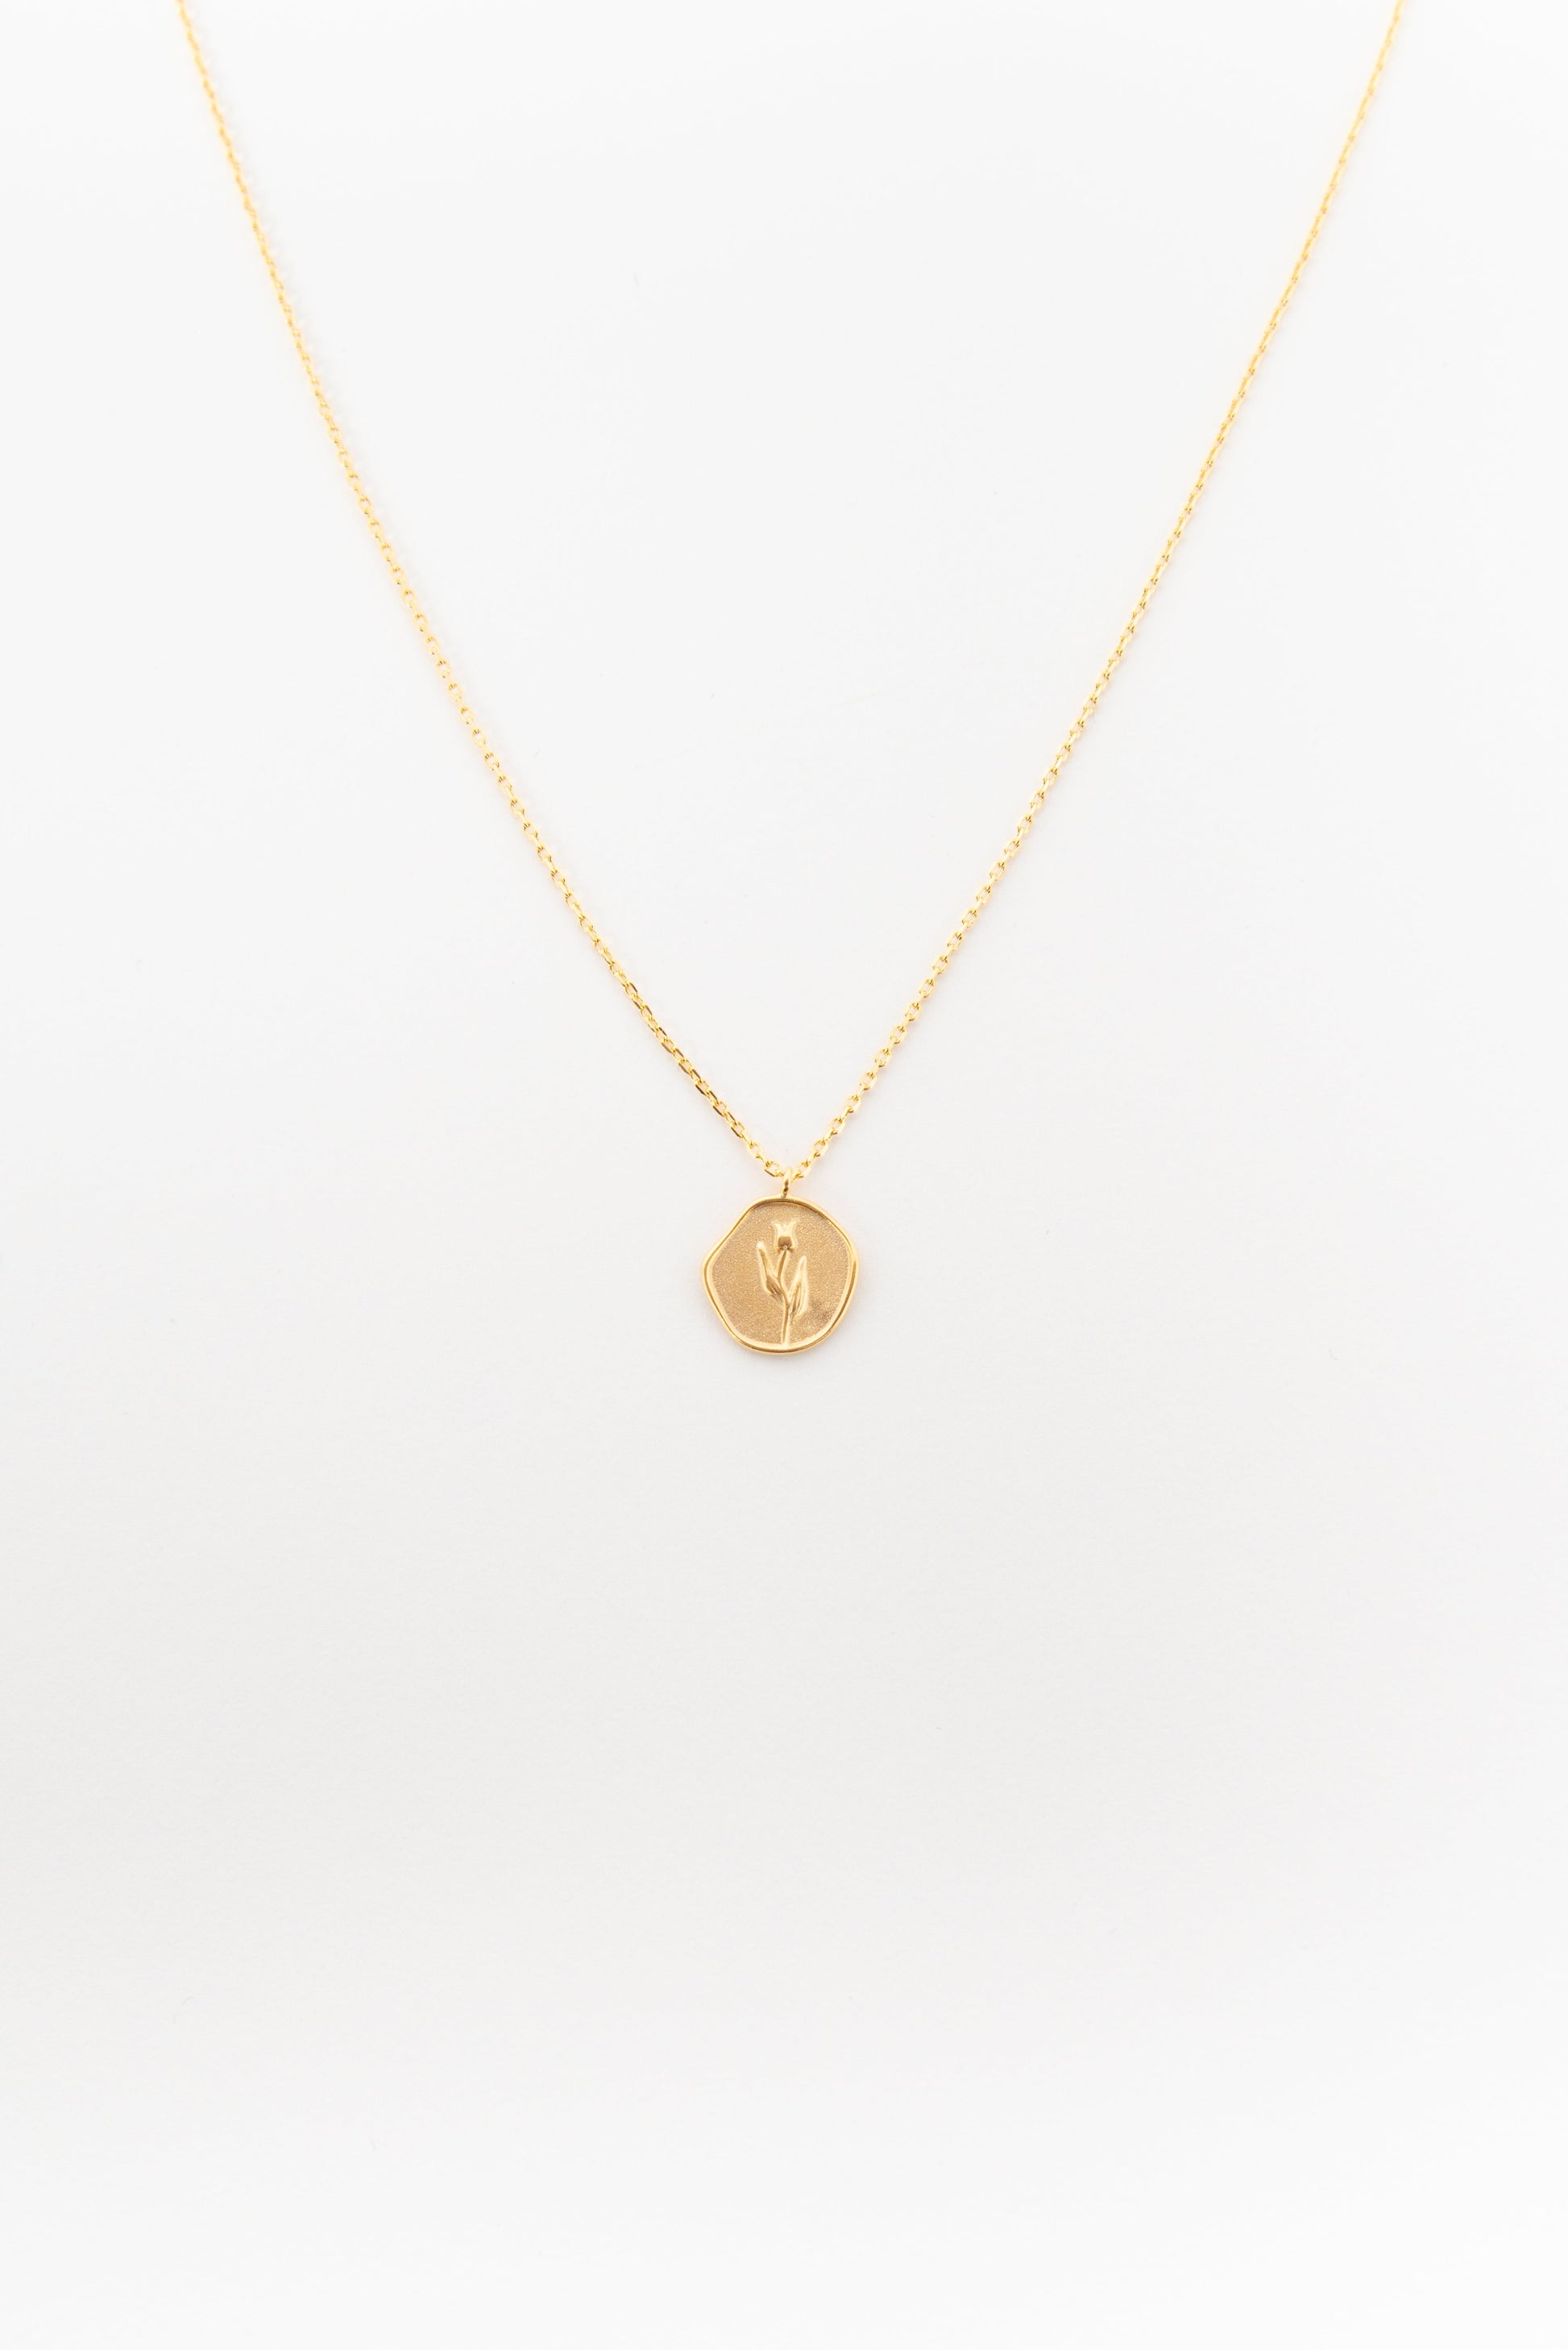 Mini Tulip Necklace WOMEN'S NECKLACE Cove Gold 16" 